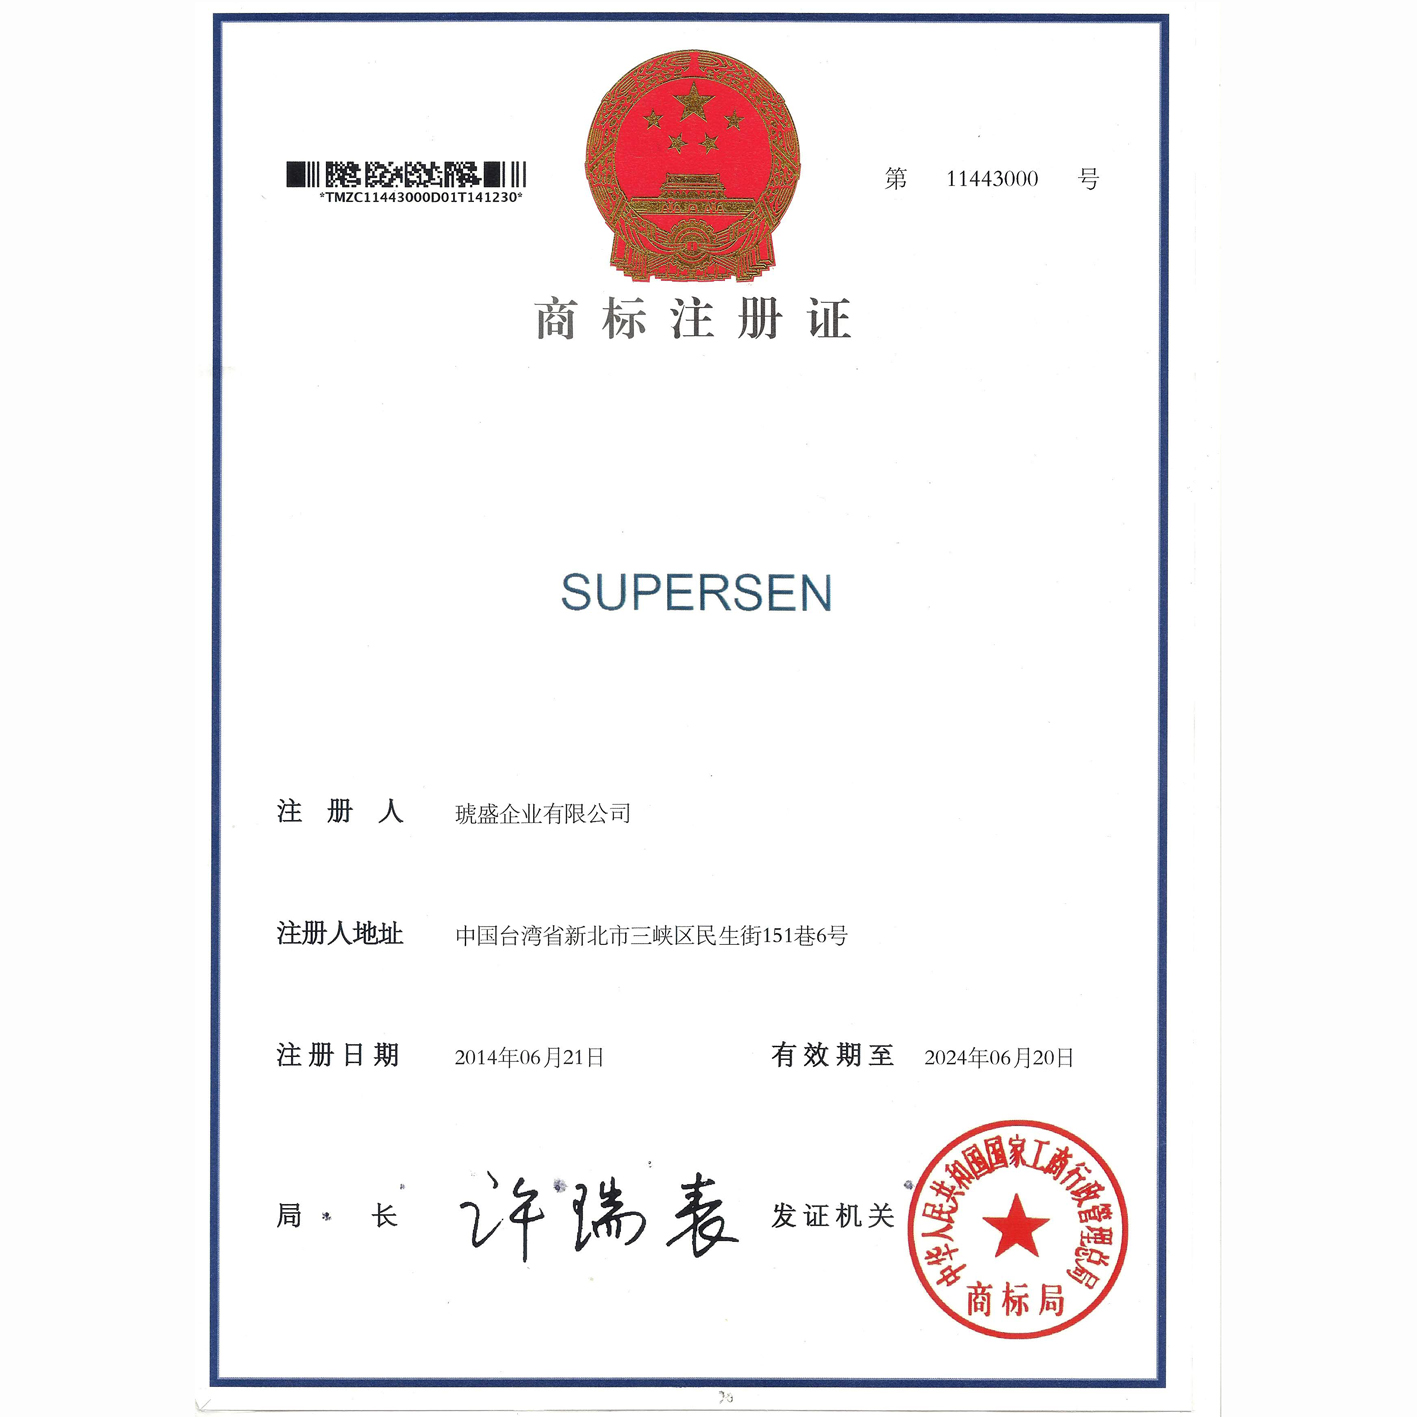 SUPER SHENG ENTERPRISE CO., LTD. ==